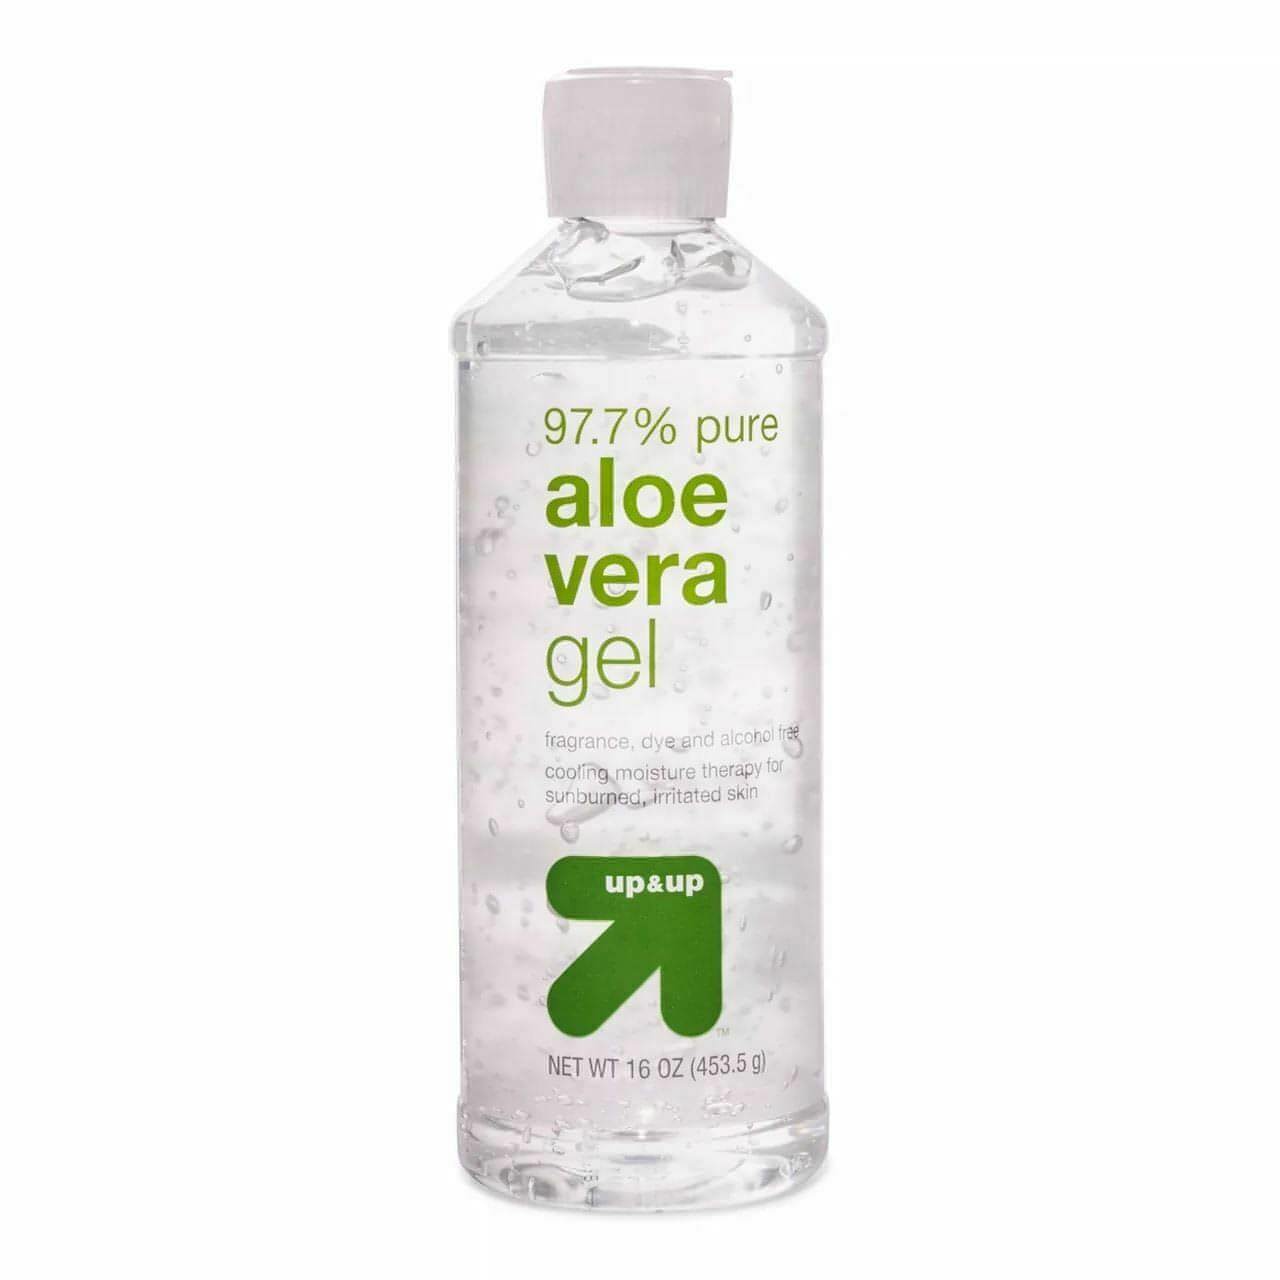 Up&Up-Aloe Vera Gel After Sun Treatments (453g) - Up&Up - Brandat Outlet